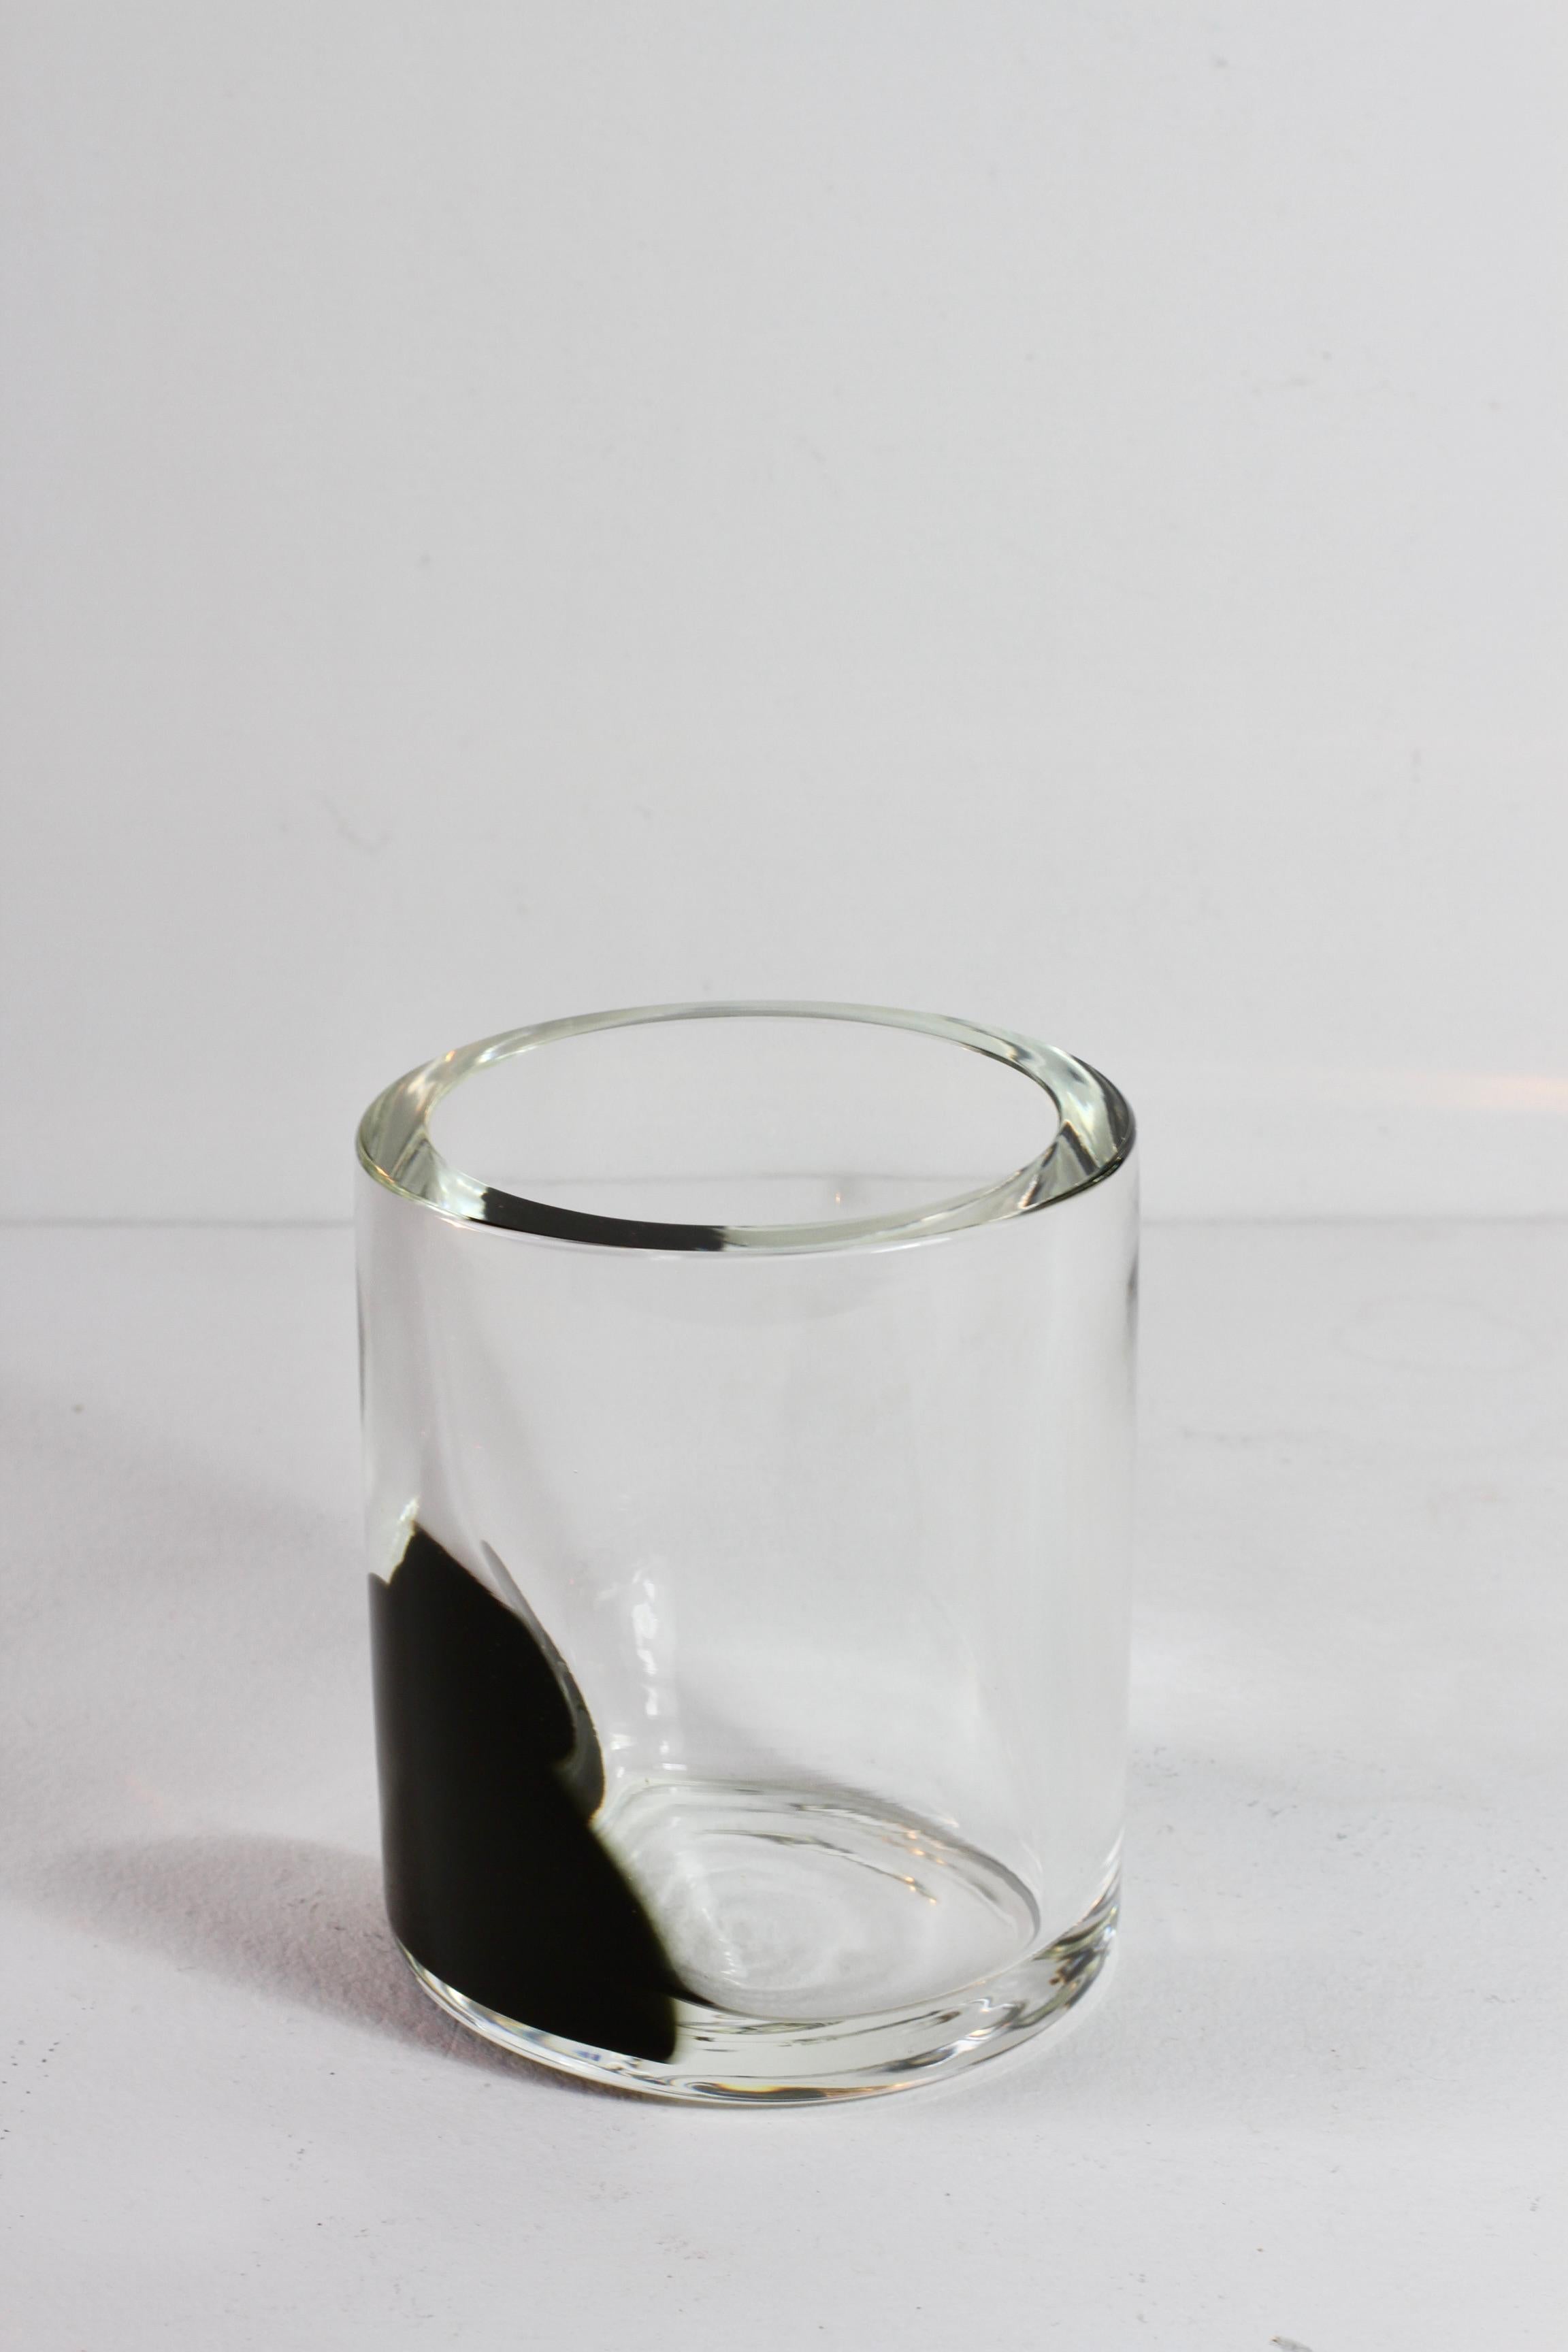 Antonio Da Ros for Cenedese 1970s Italian Round Black & Clear Murano Glass Vase For Sale 8